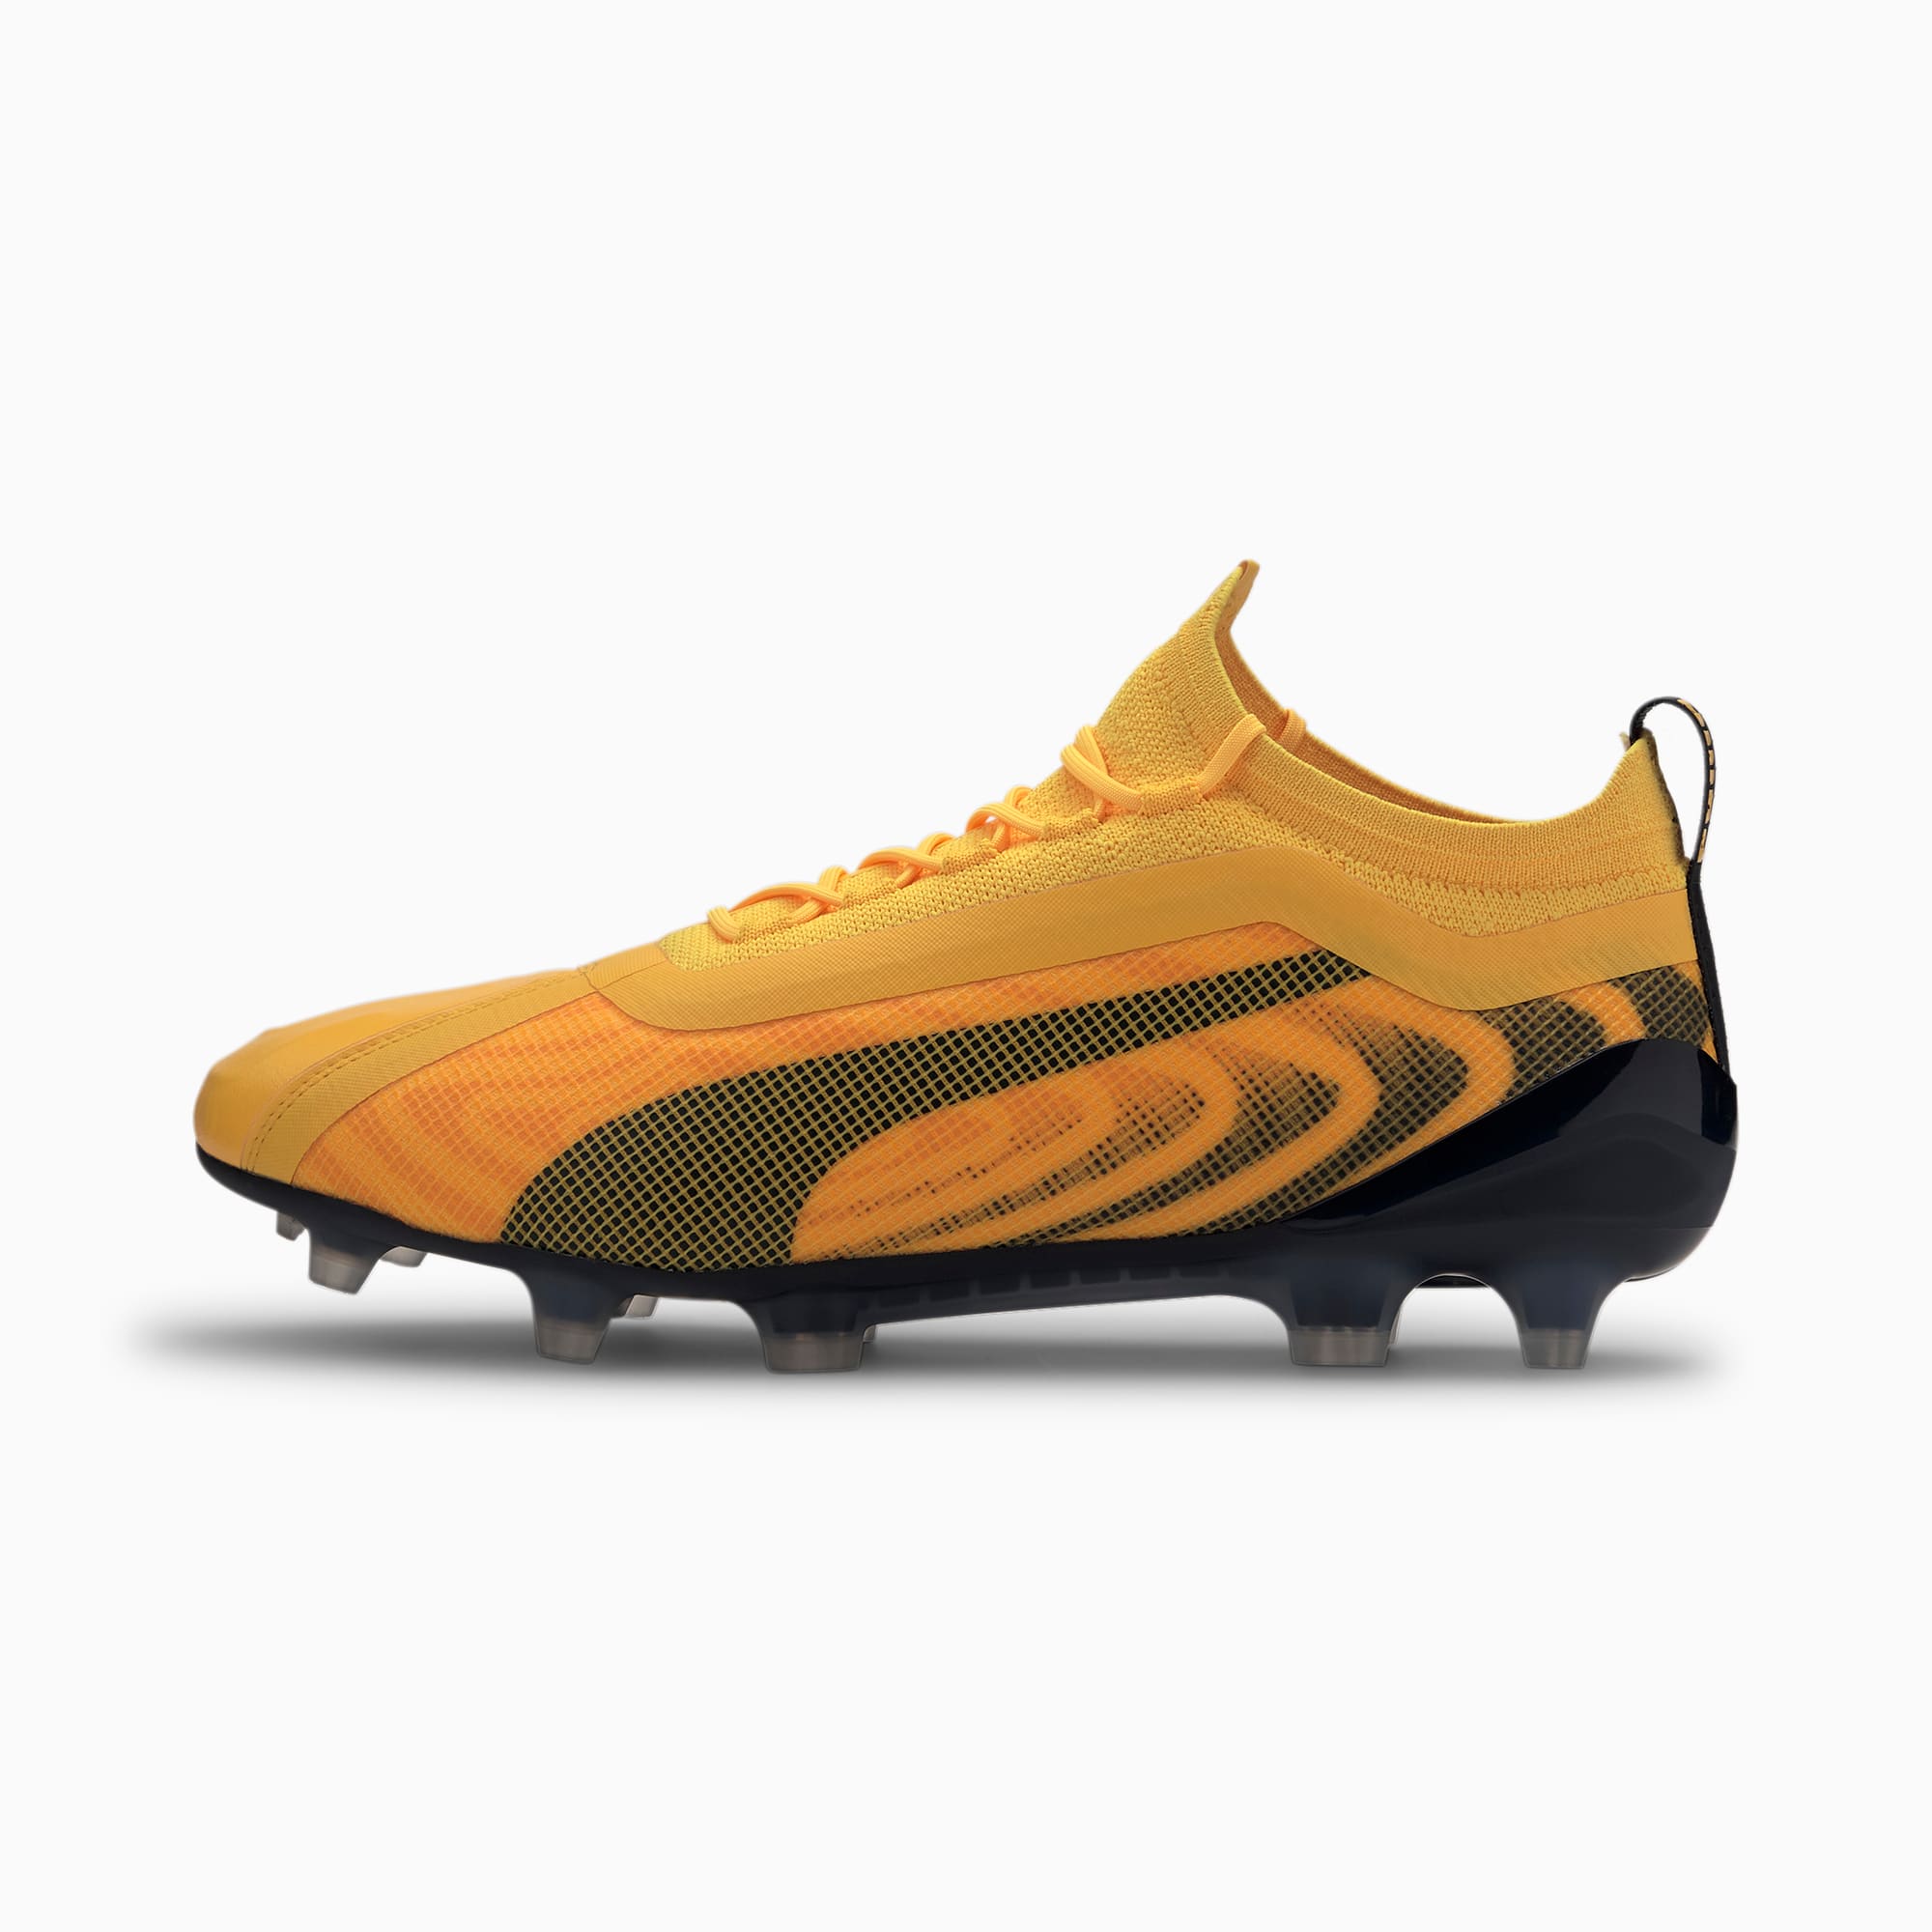 puma football boots orange